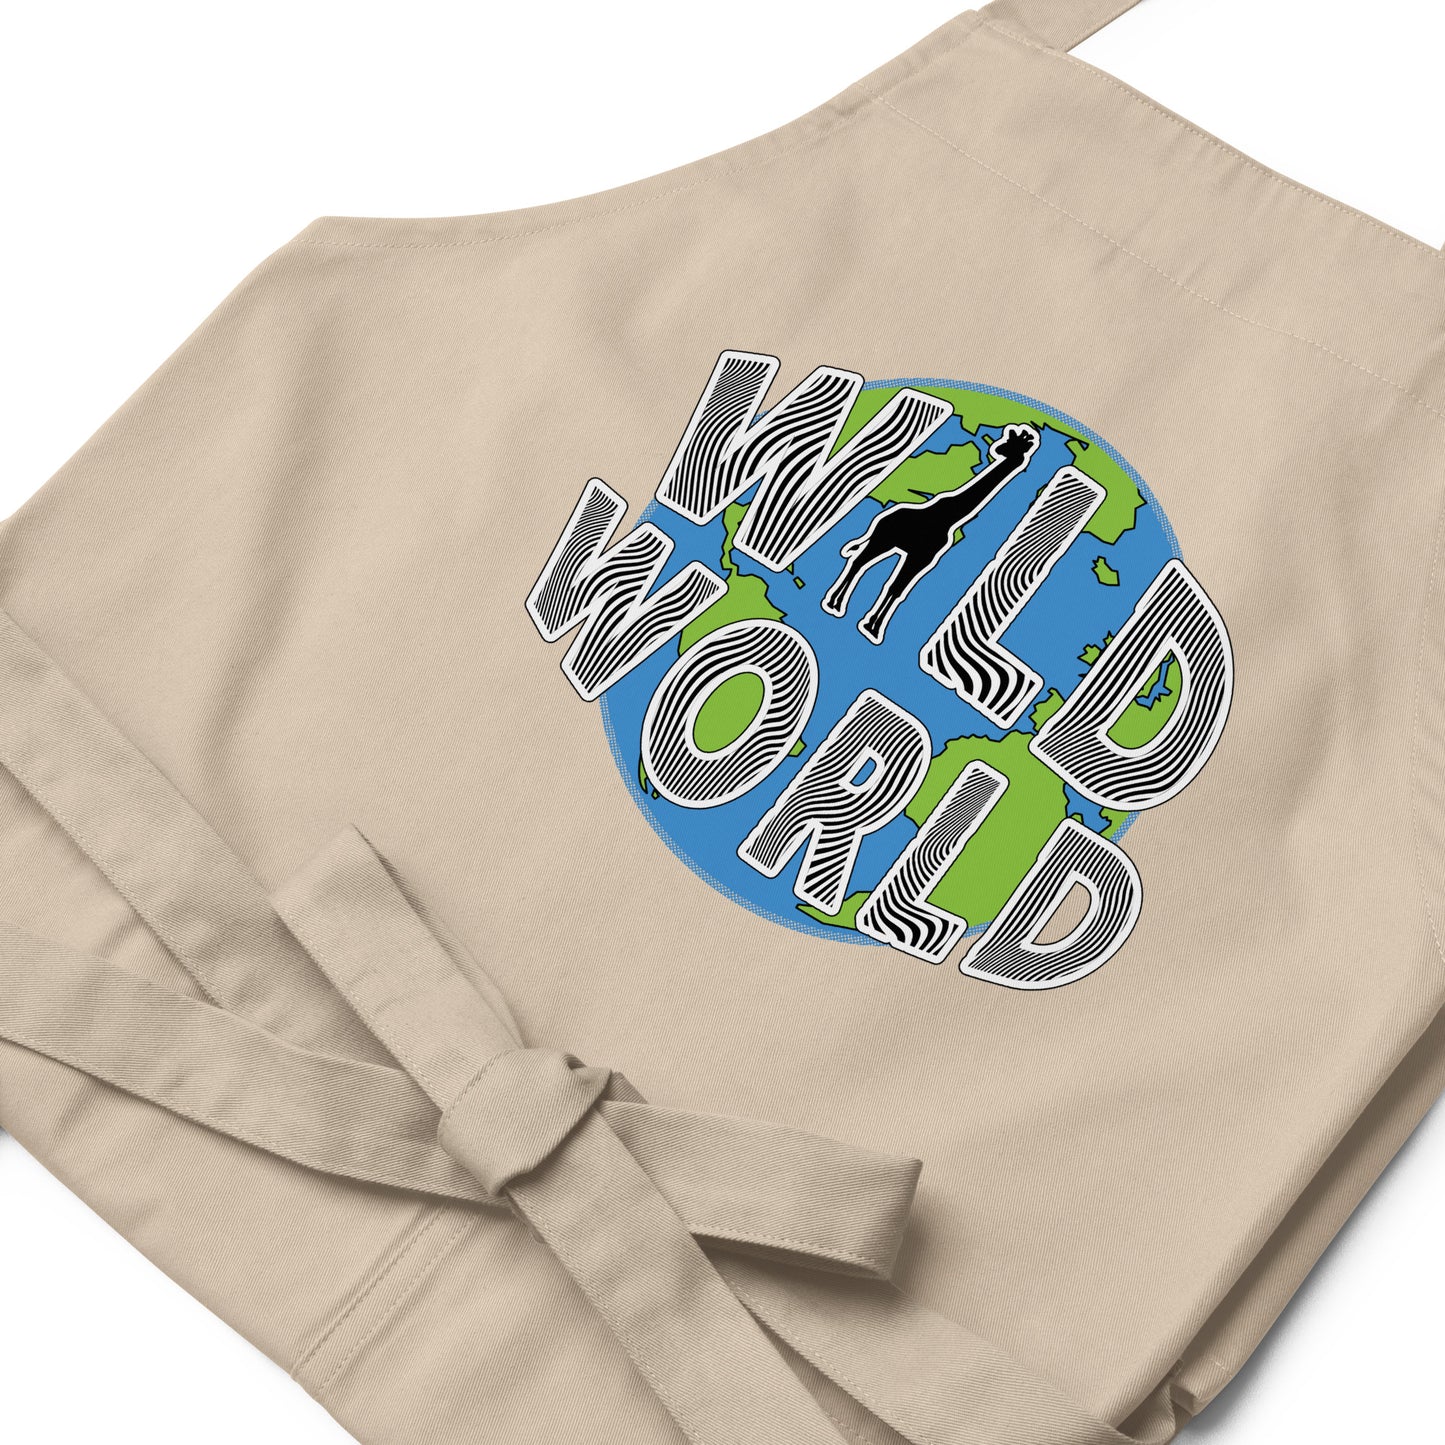 Organic cotton apron - Wild World w Scott Solomon